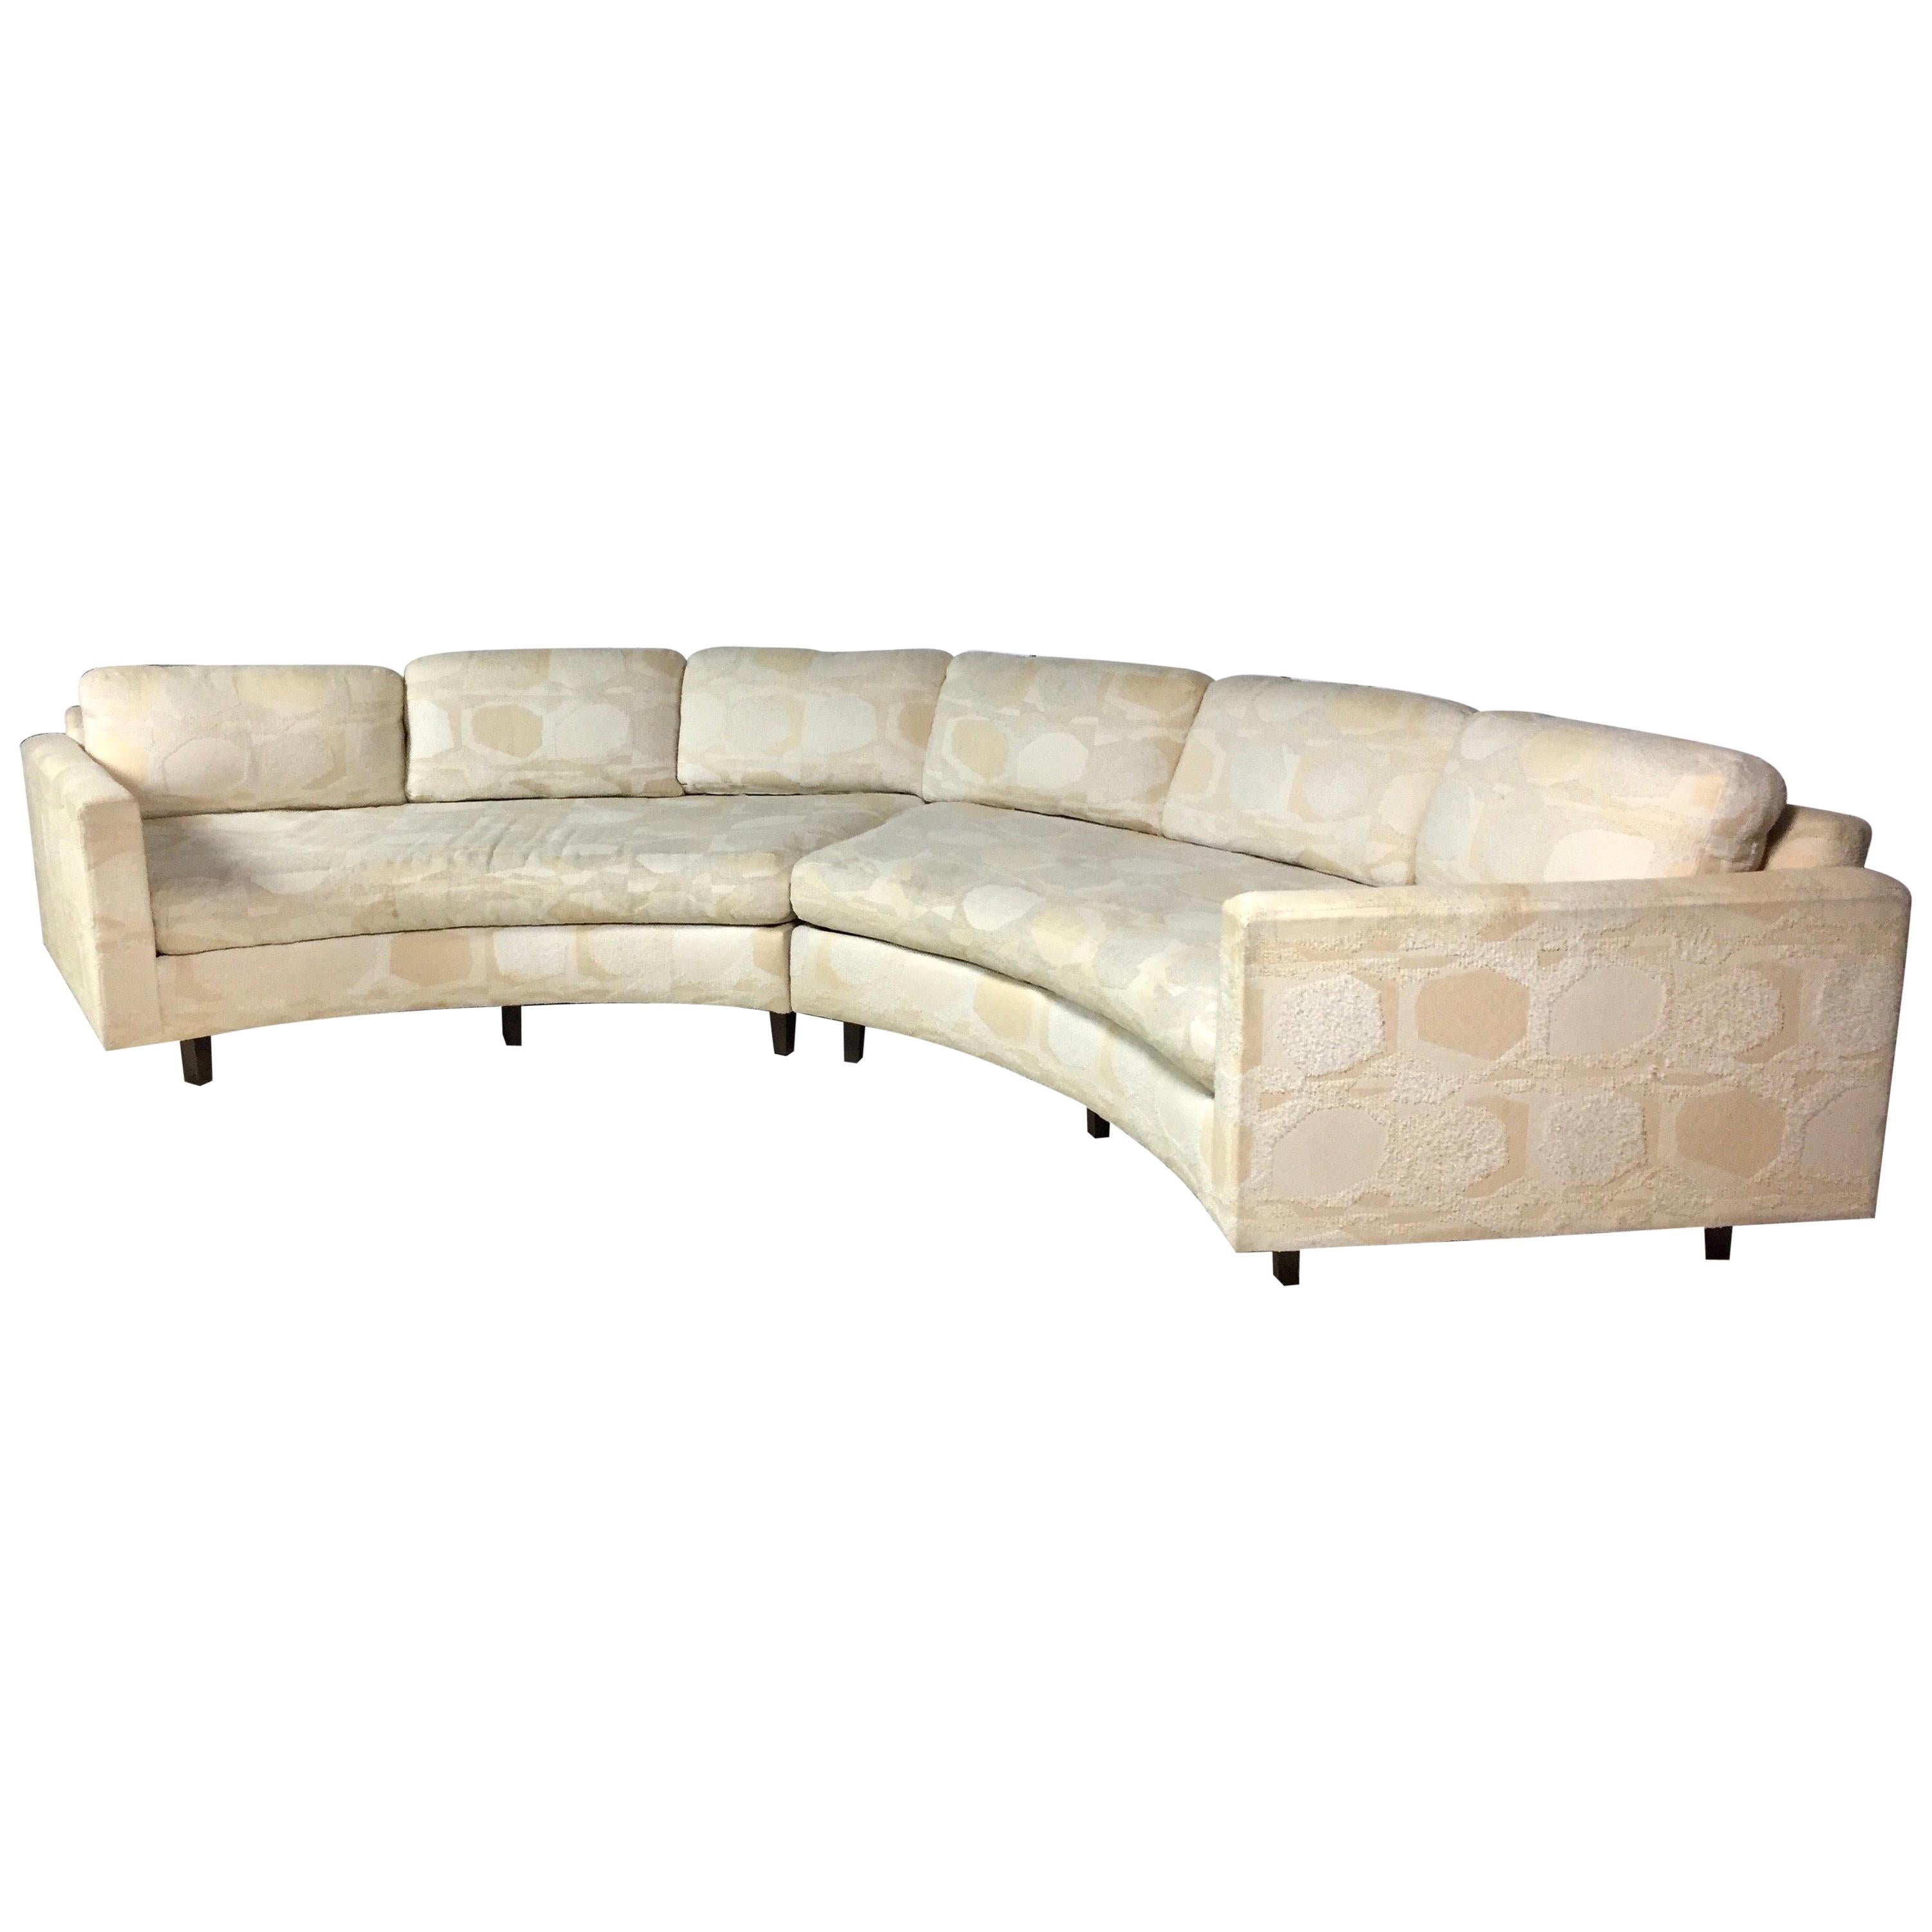 Adrian Pearsall Craft Associates Mid-Century Modern Sectional Sofa Semi-Circular